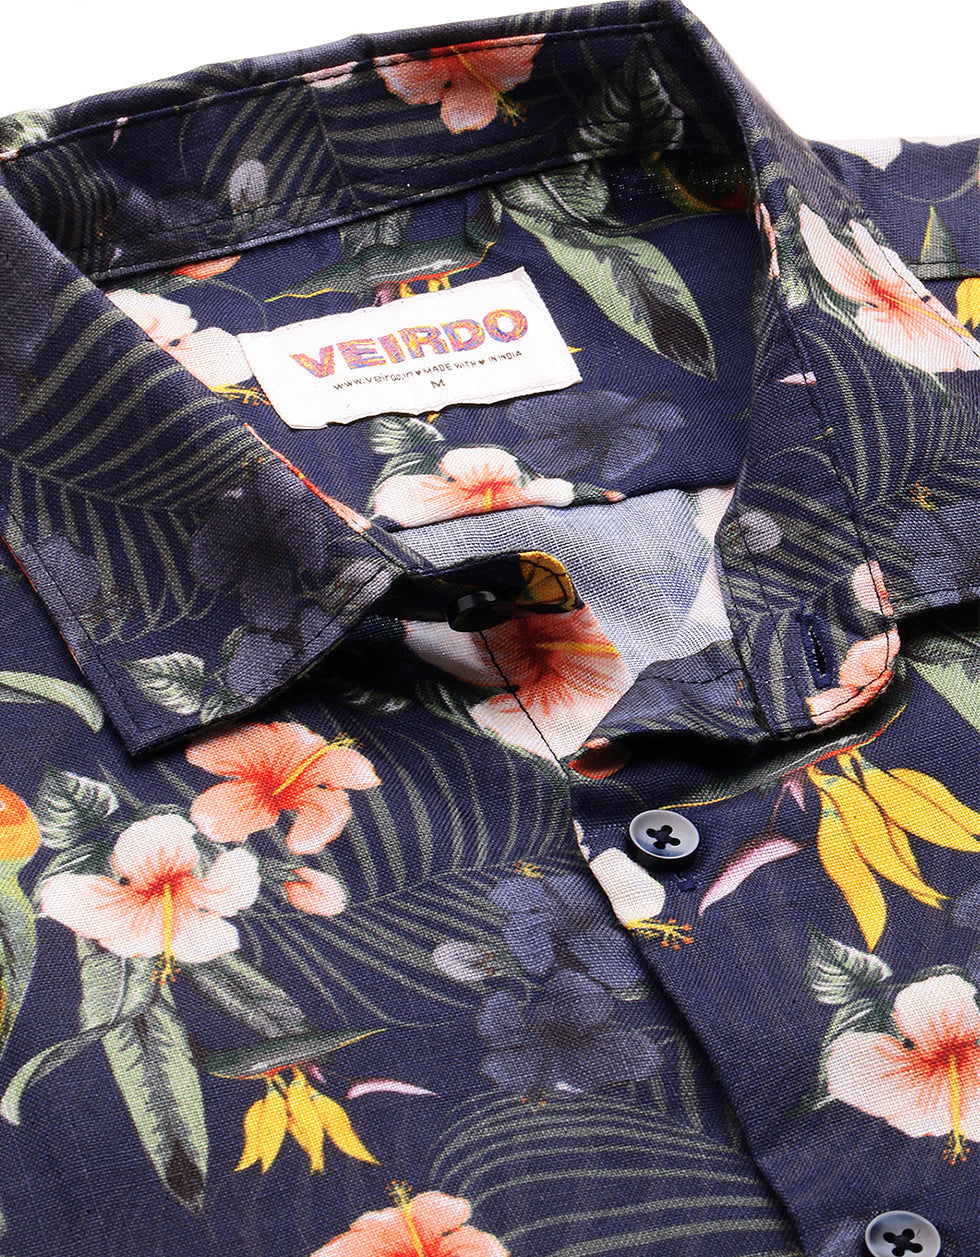 Navy Floral Printed Casual Shirt Veirdo